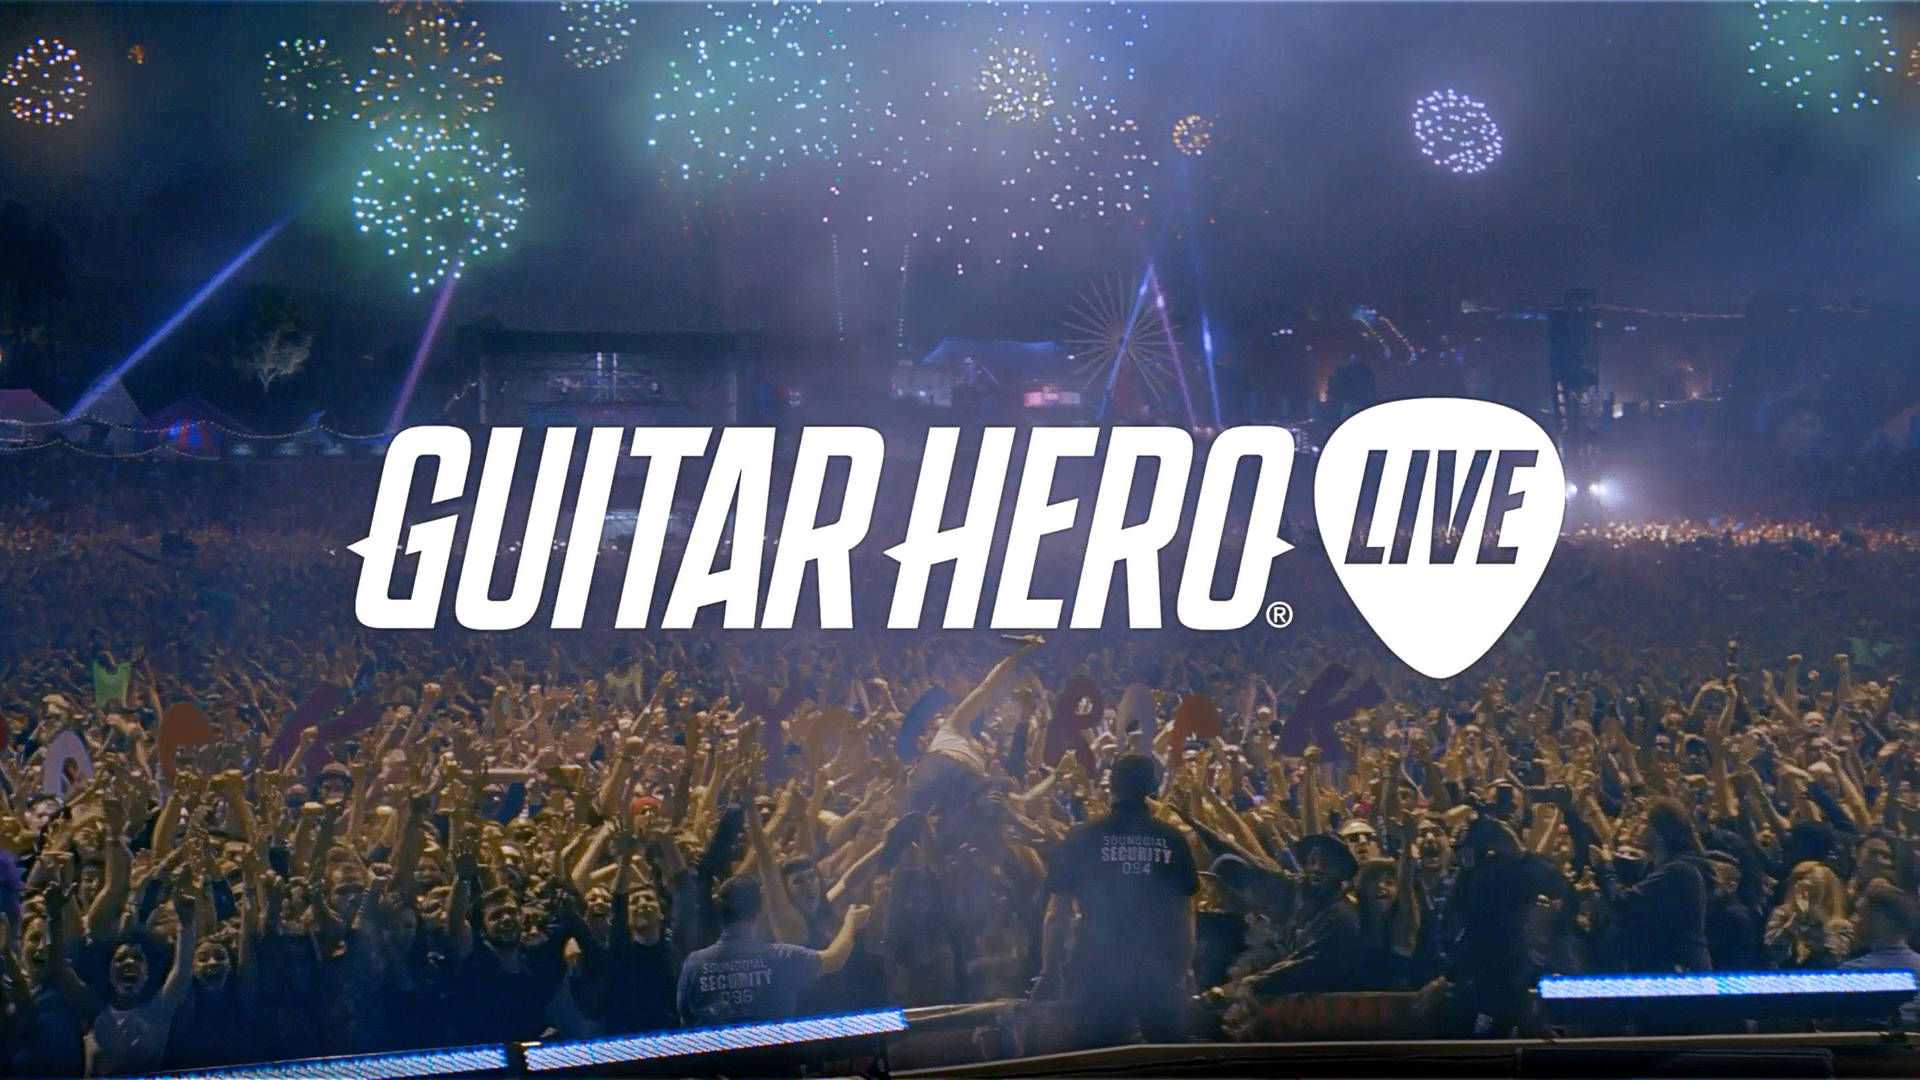 Guitar Hero Live Concert Background